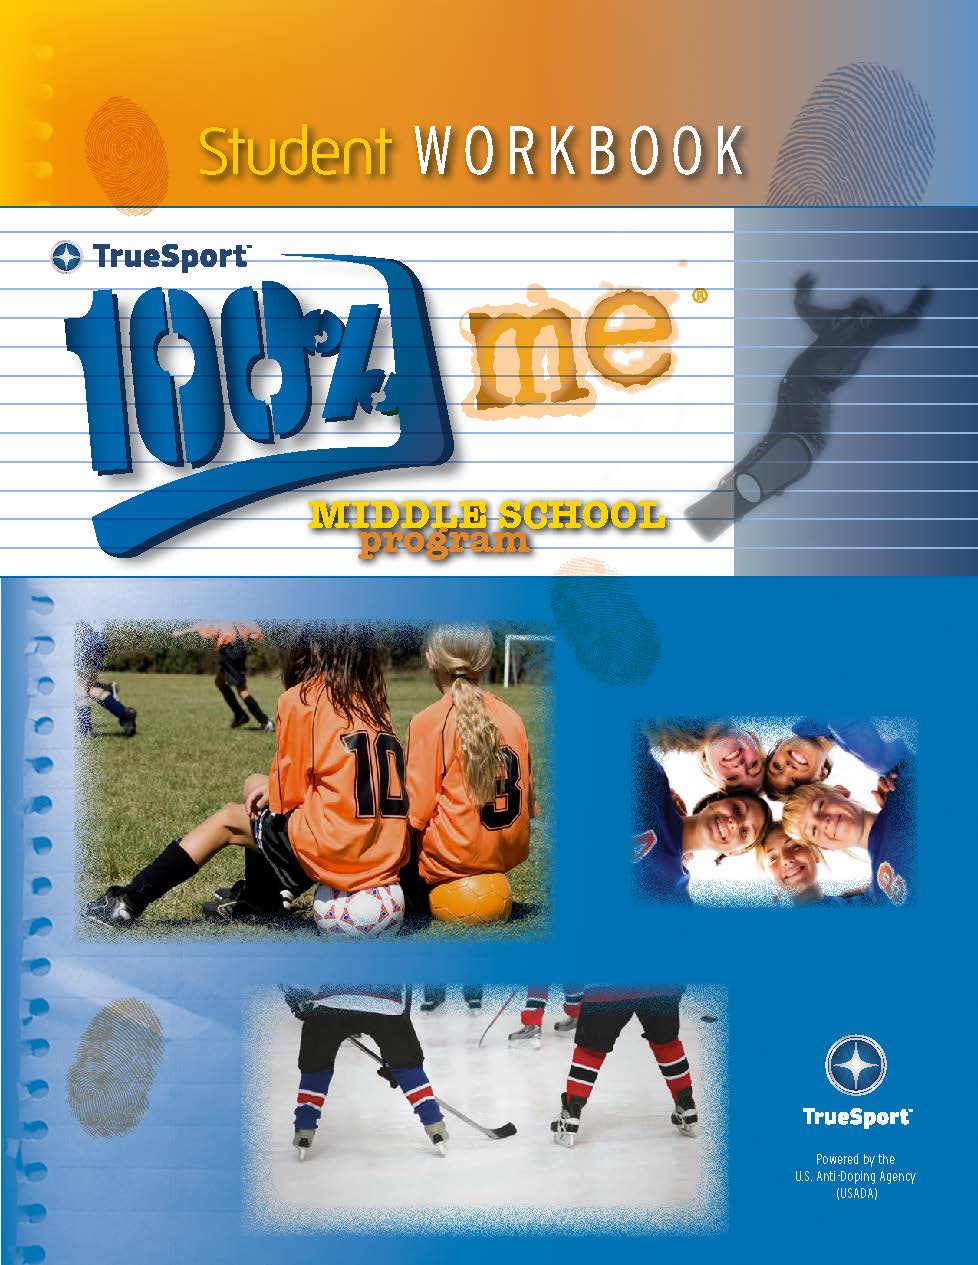 TrueSport 100% me middle school program student workbook cover image.